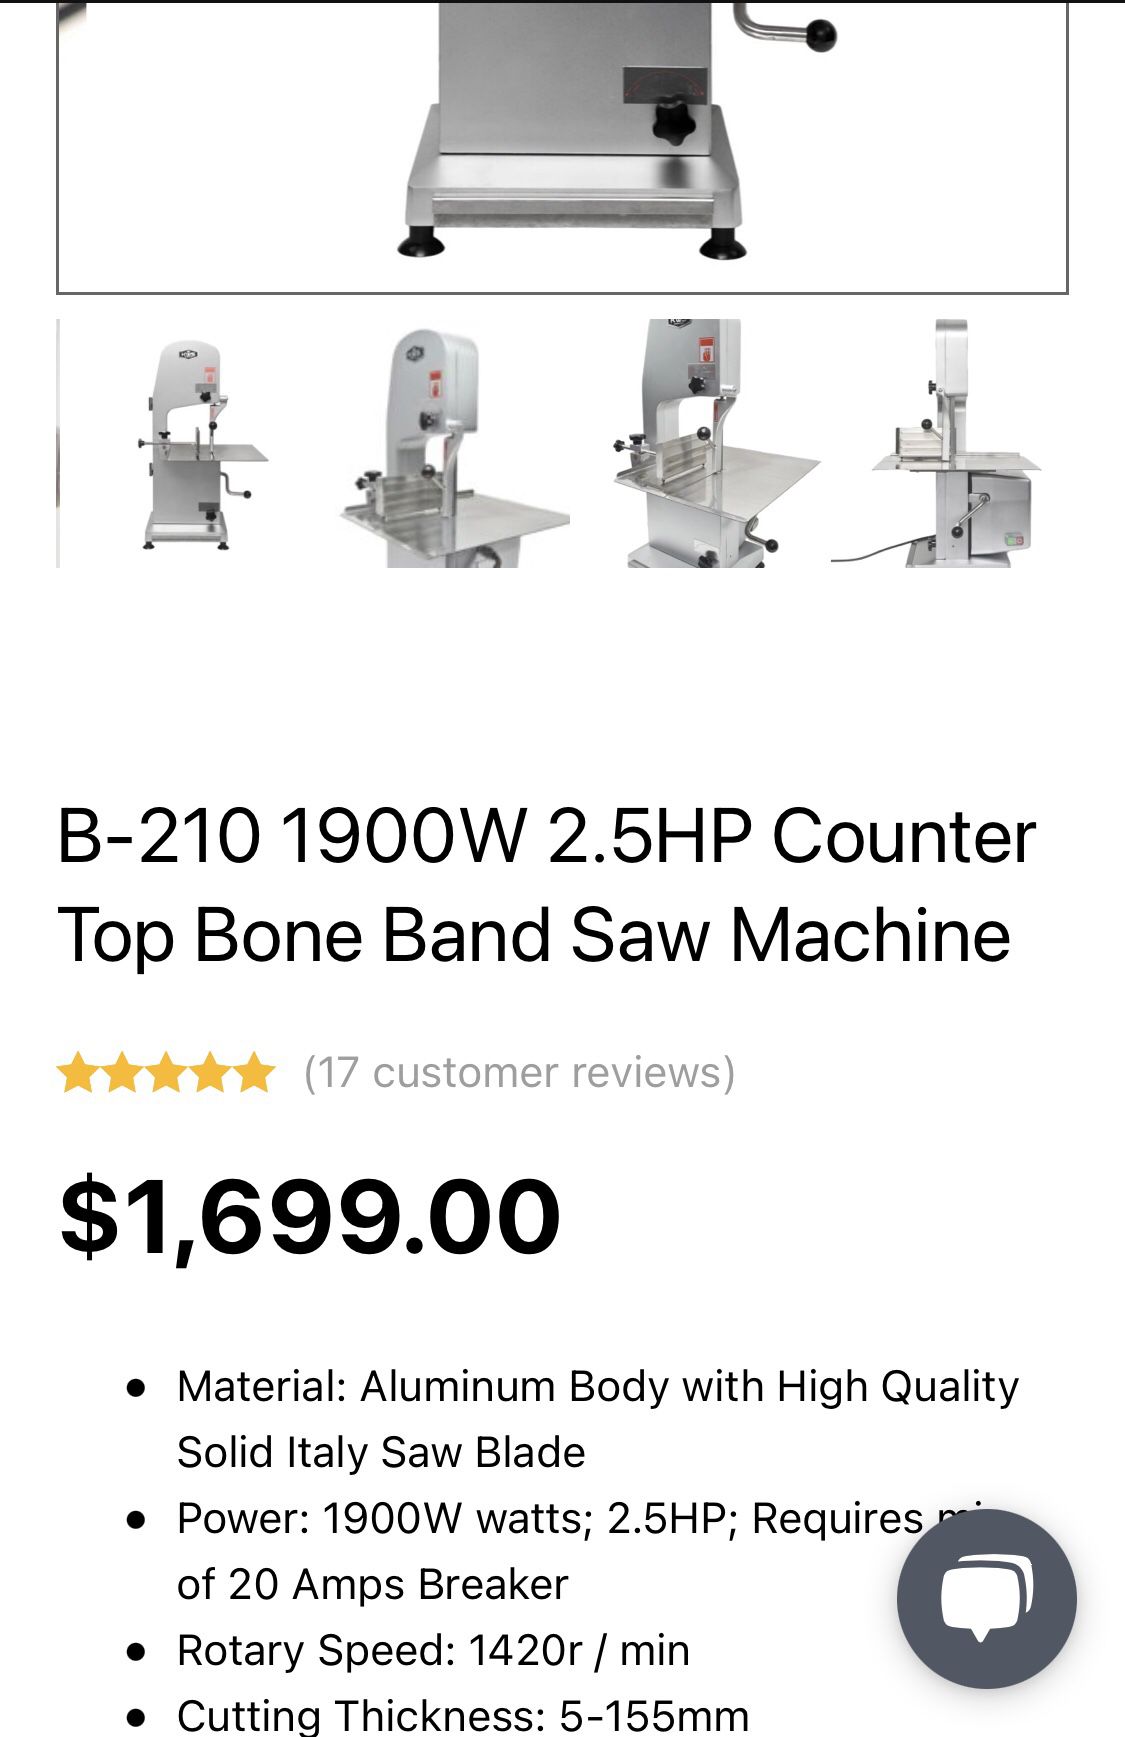 B-210 1900W 2.5HP Bone Band Saw Machine - Kitchenware Station